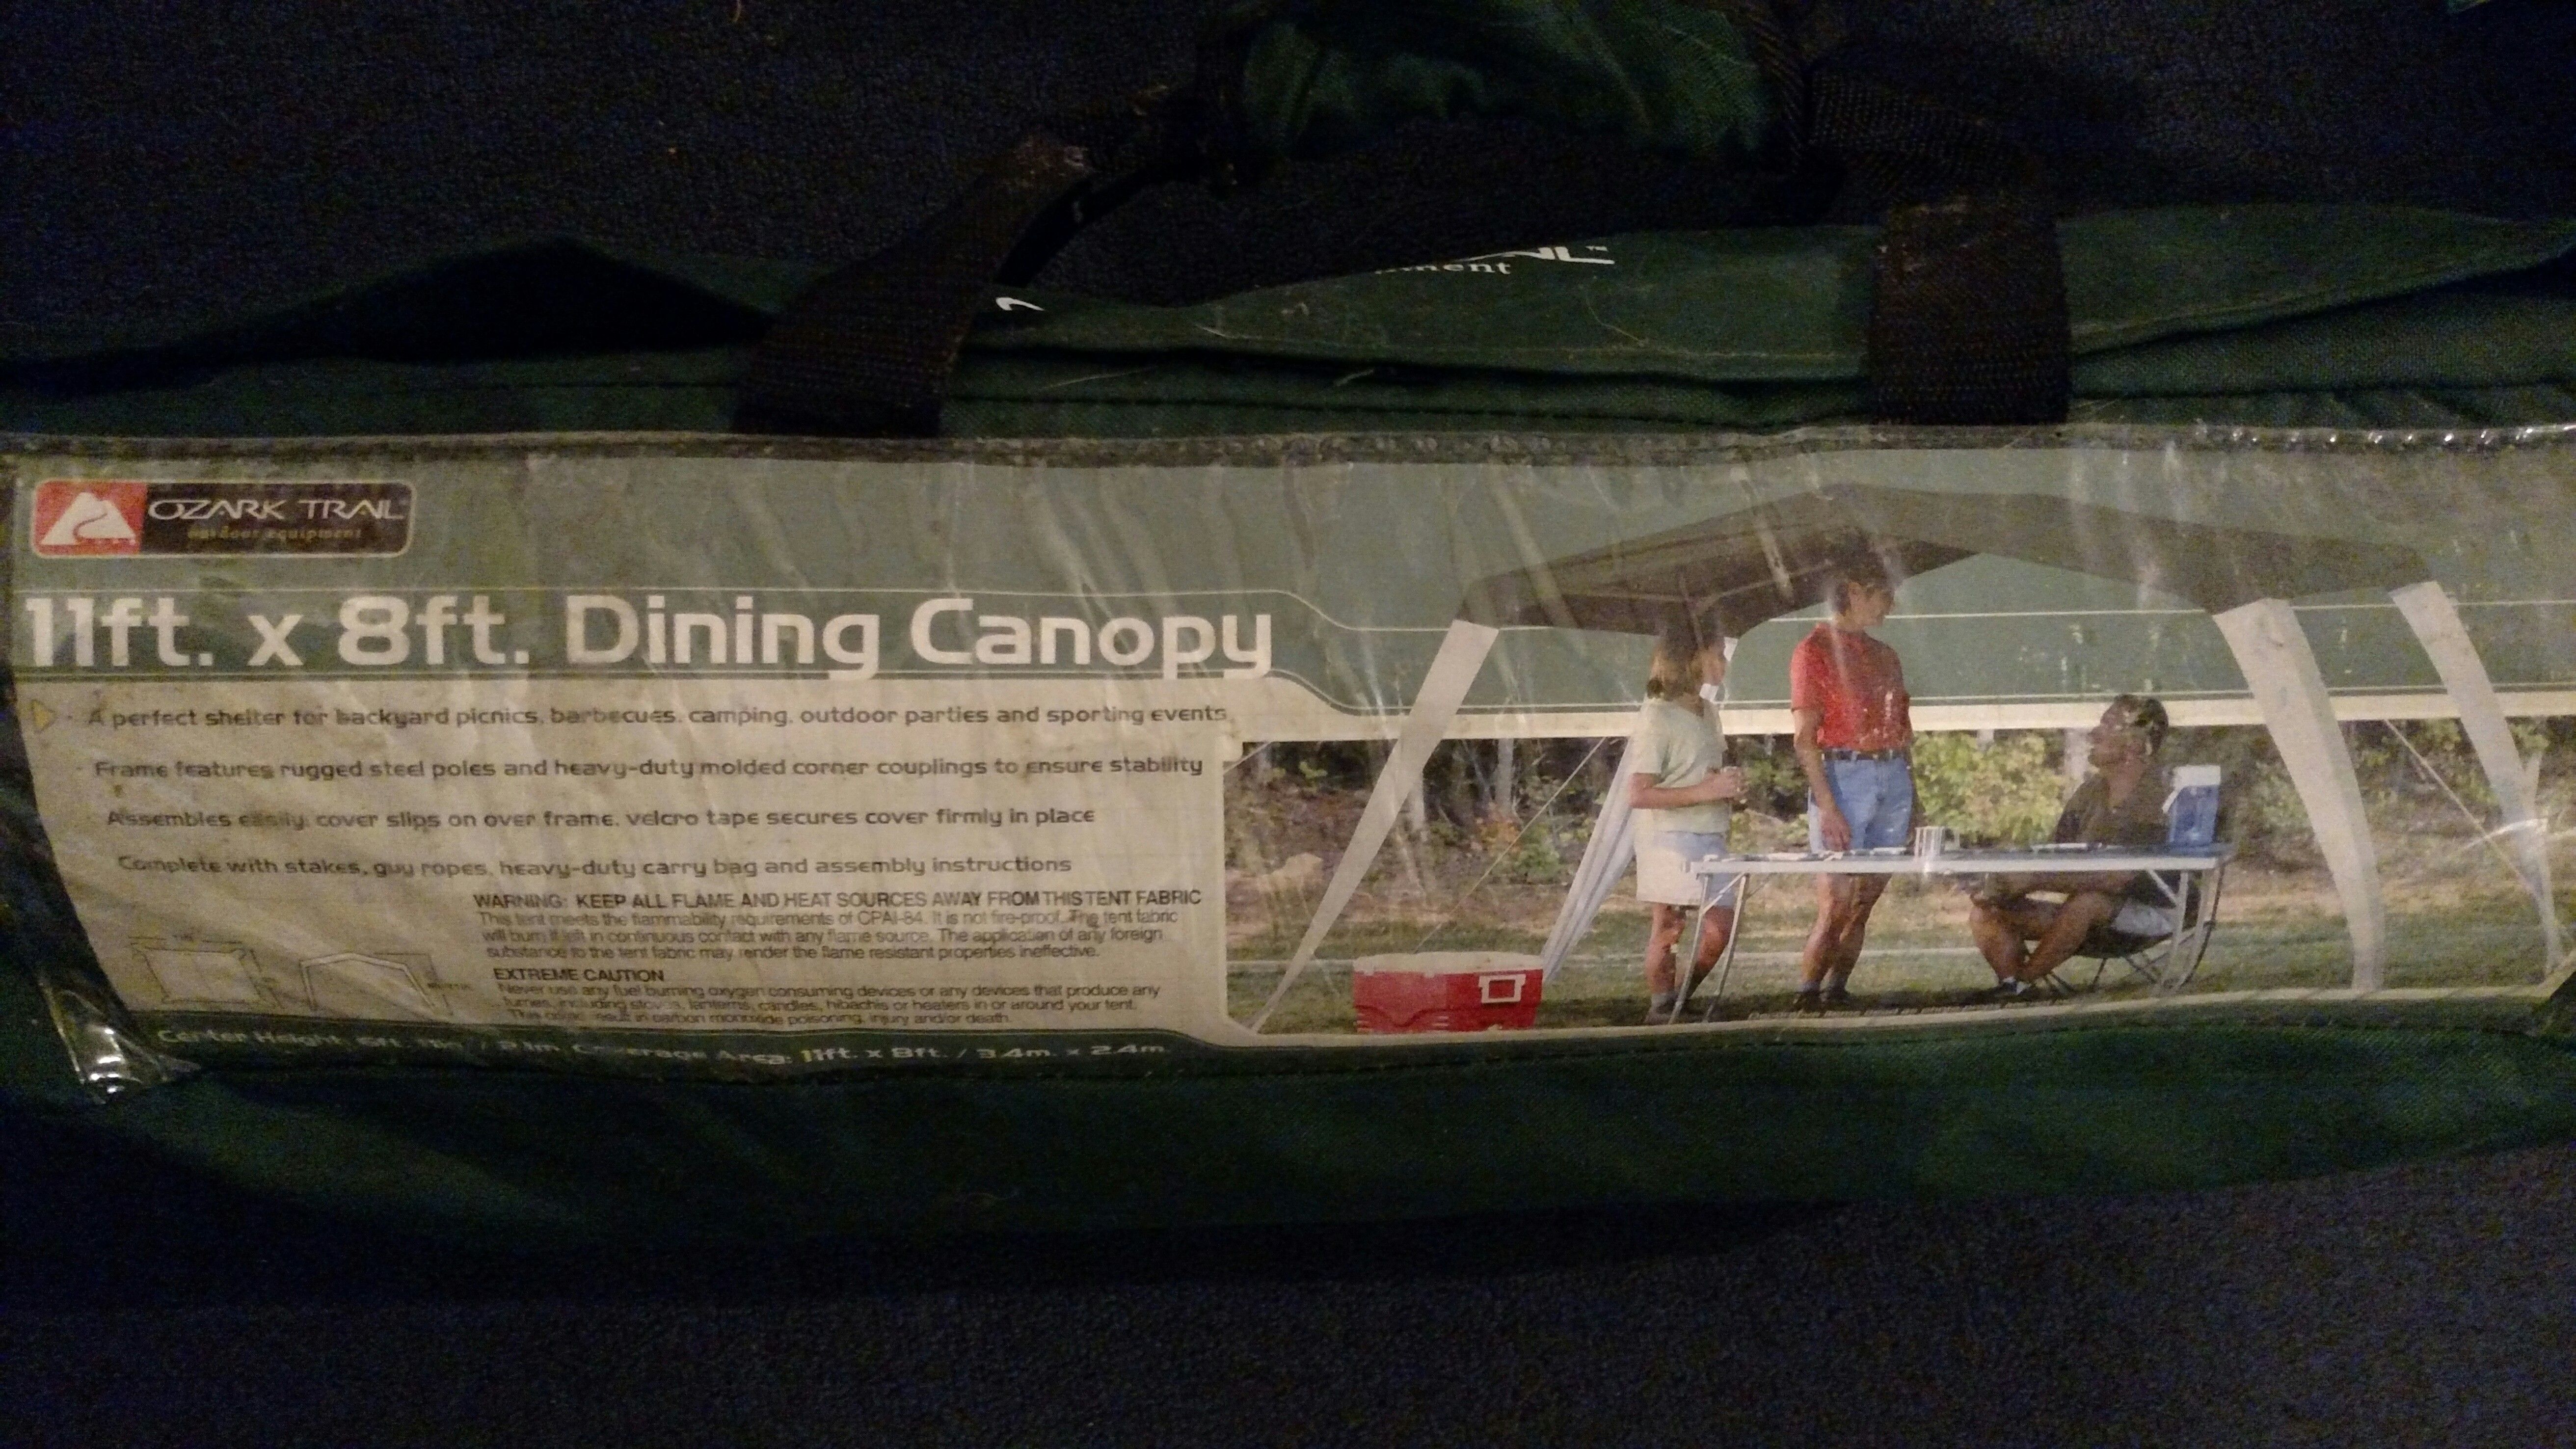 Ozark dining canopy 11ft x 8ft